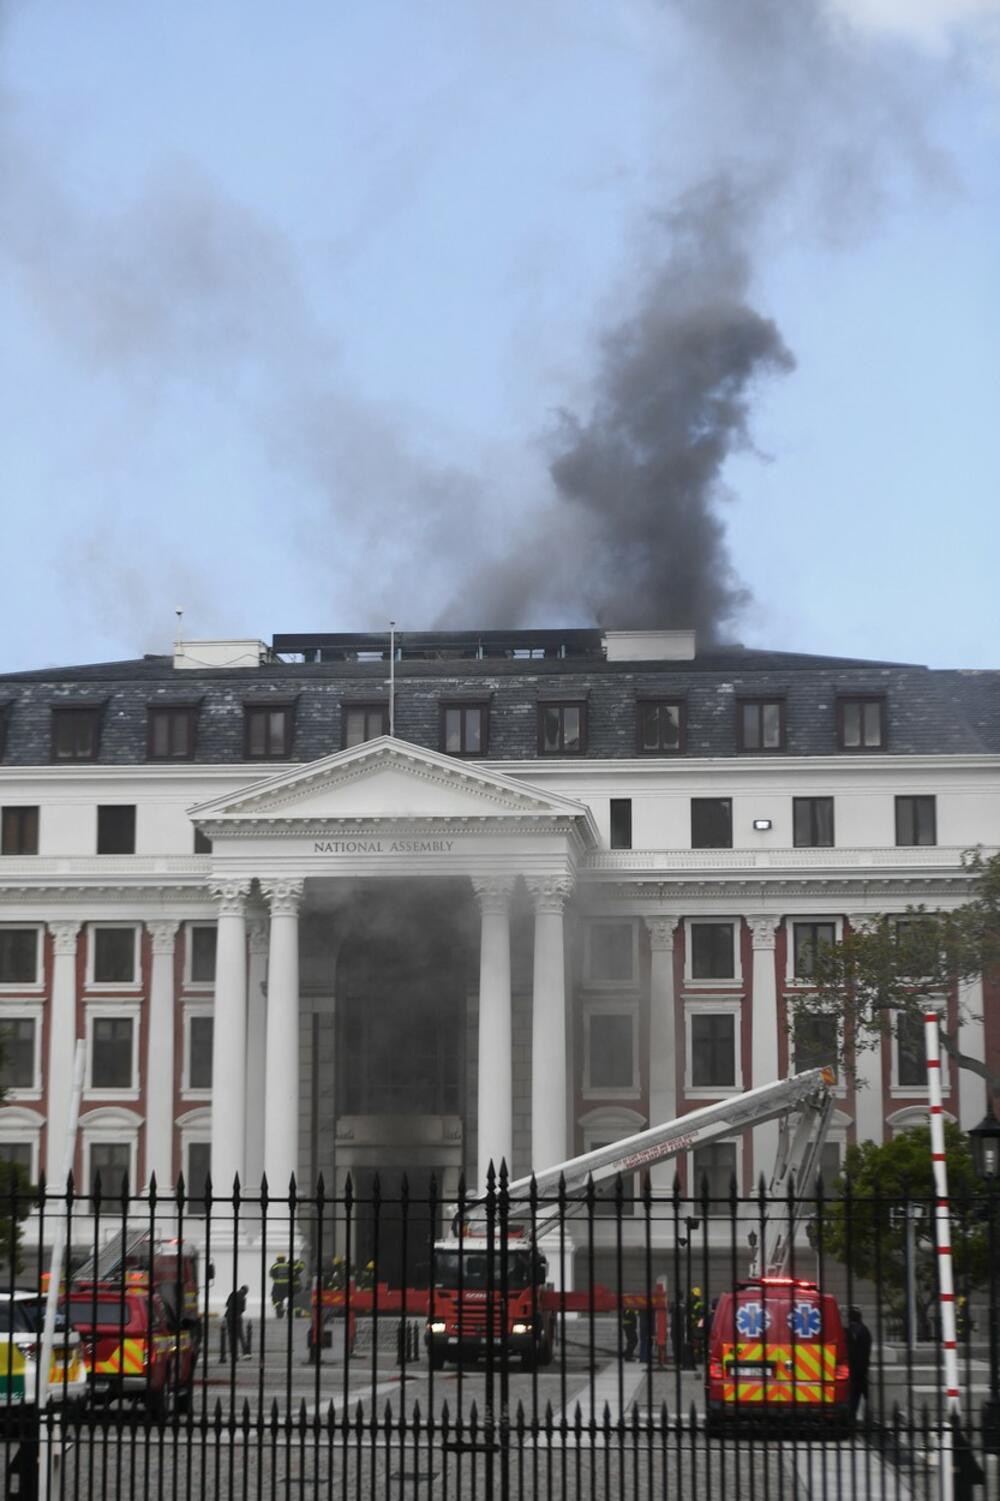 0650339132, Kejptaun, požar, gori zgrada parlamenta